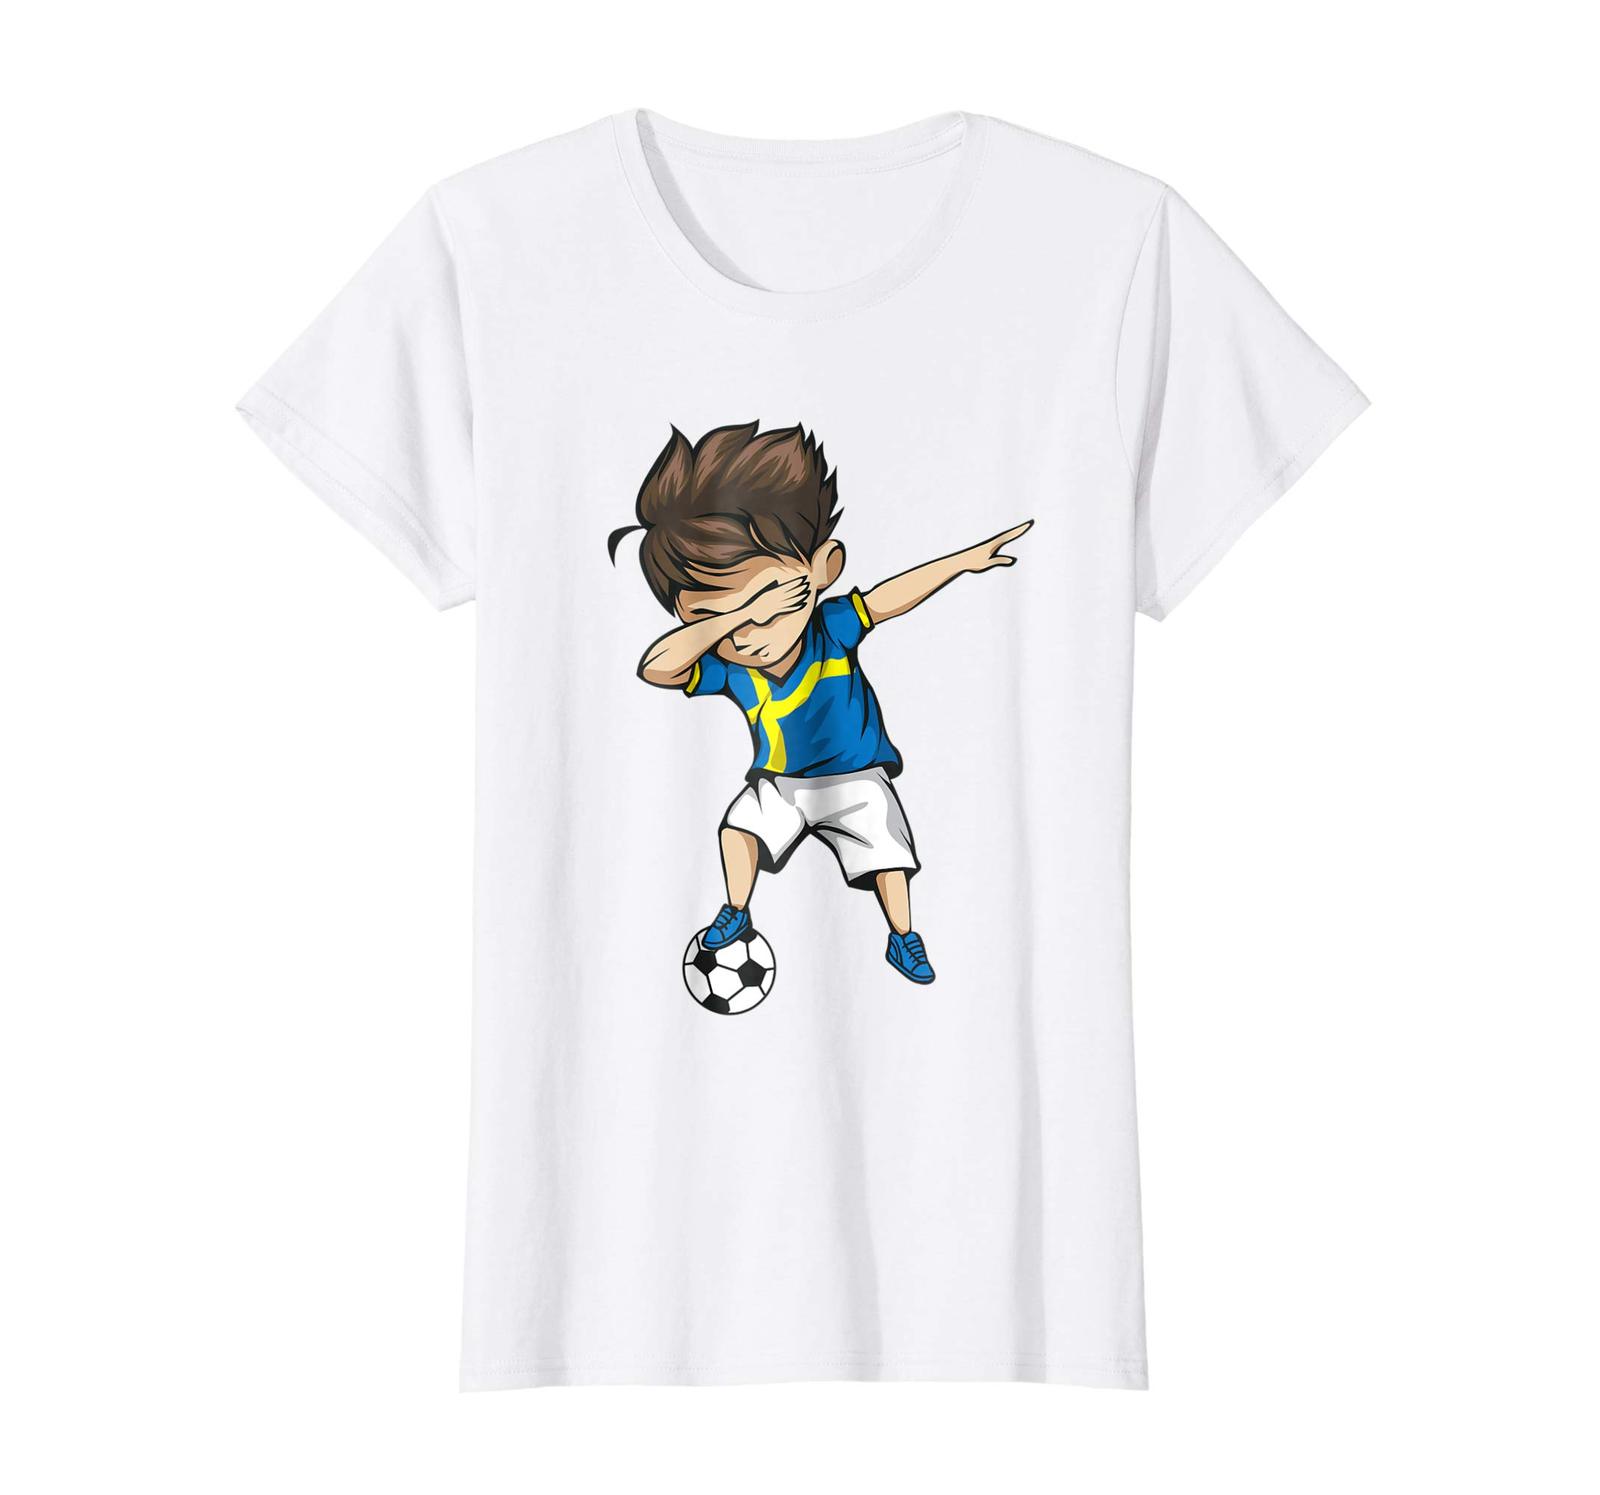 Sport Shirts - Dabbing Soccer Boy Sweden Jersey Shirt - Swedish Football Wowen - $19.95 - $23.95